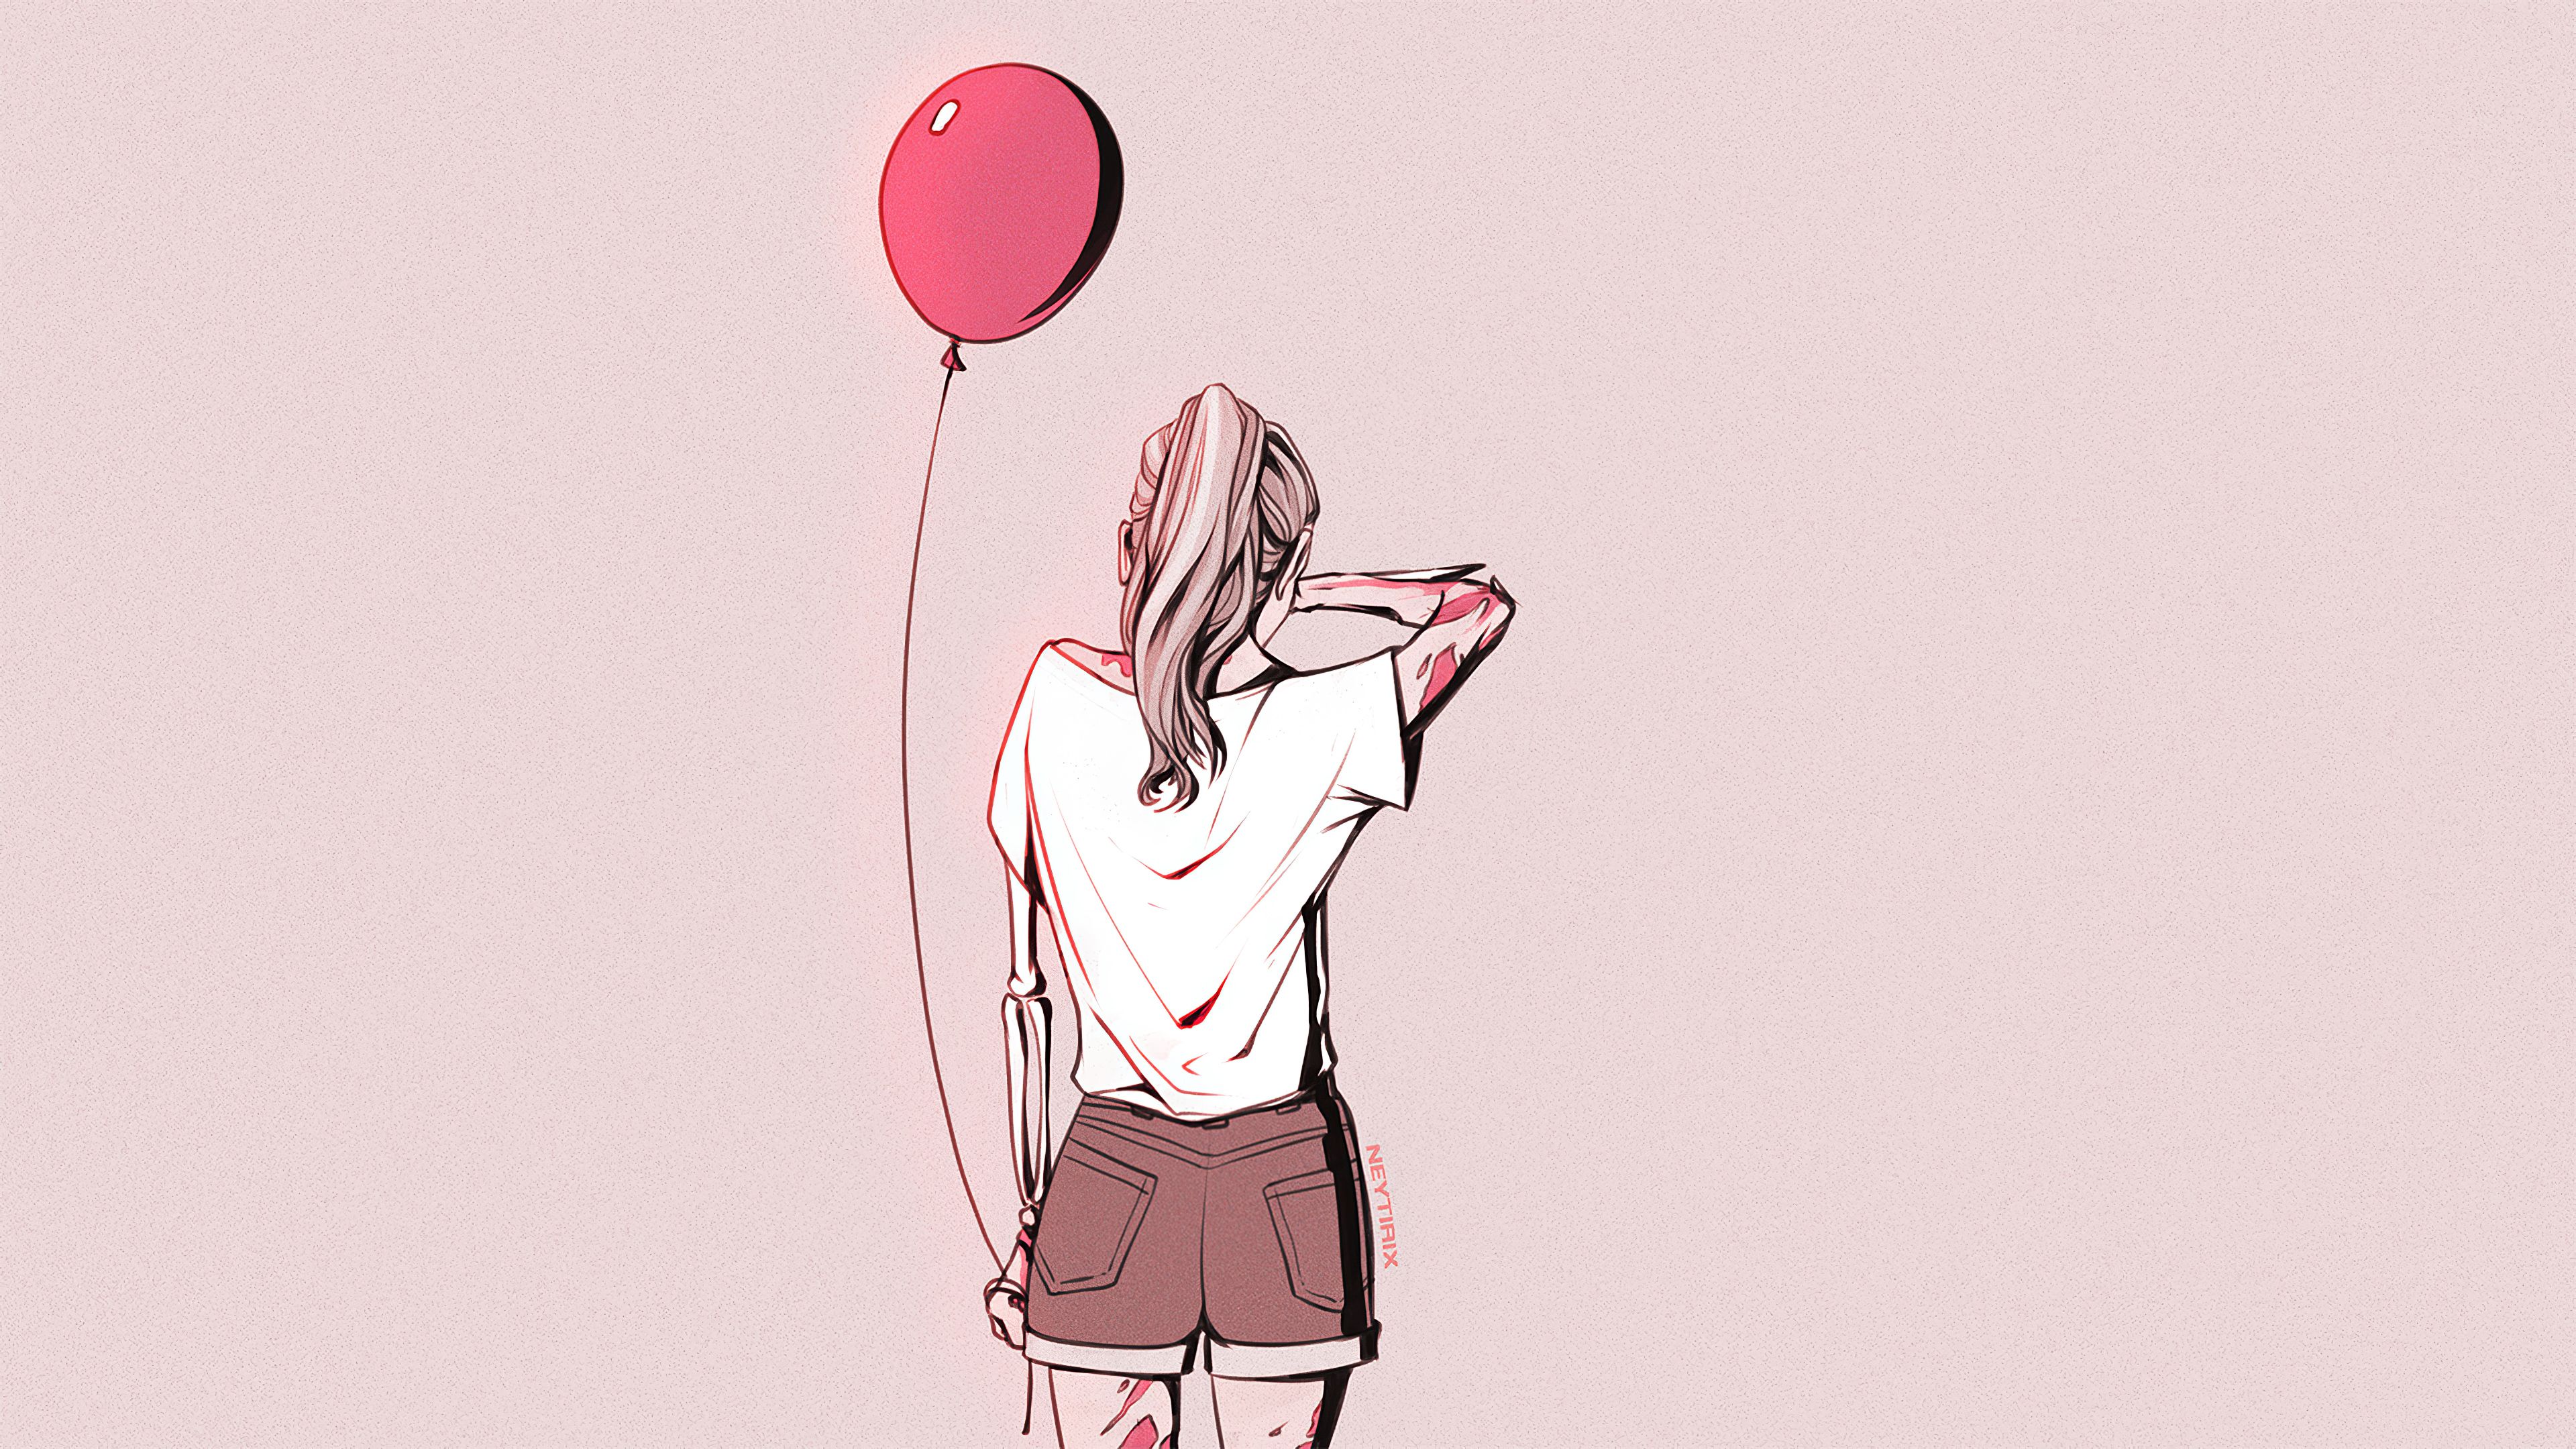 Crying Girl Sad With Balloon 4k, HD Artist, 4k Wallpaper, Image